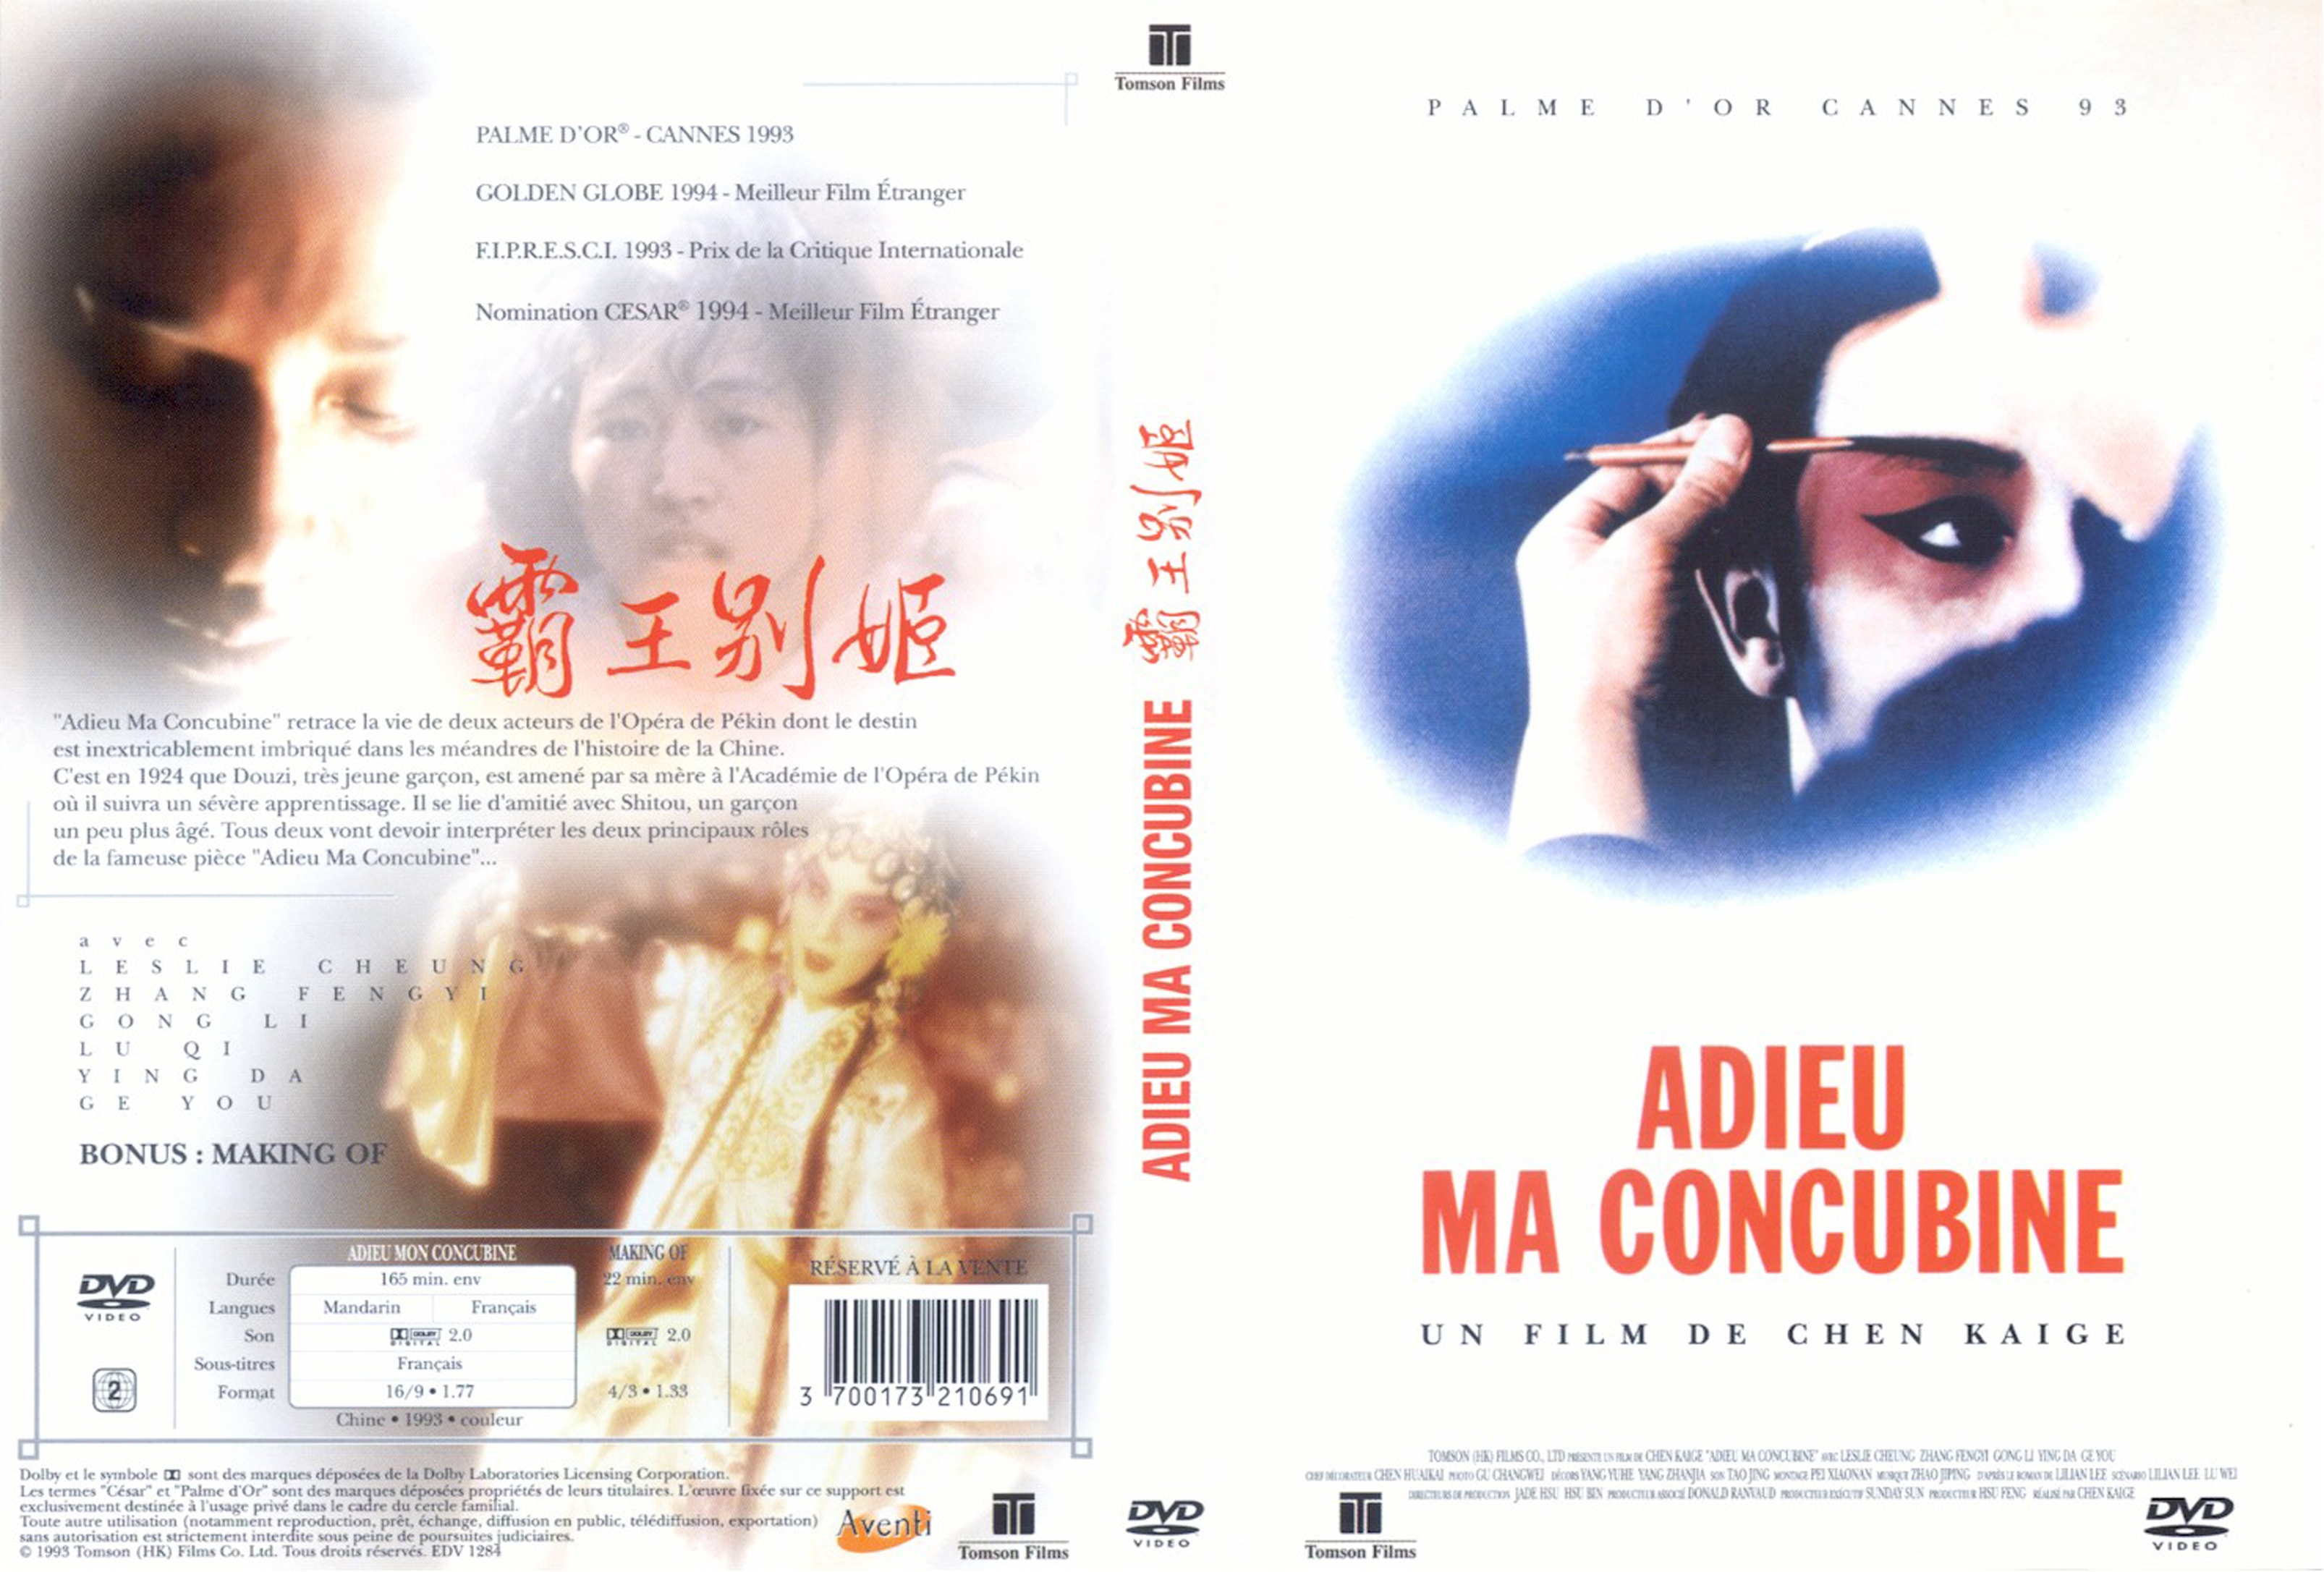 Jaquette DVD Adieu ma concubine v2